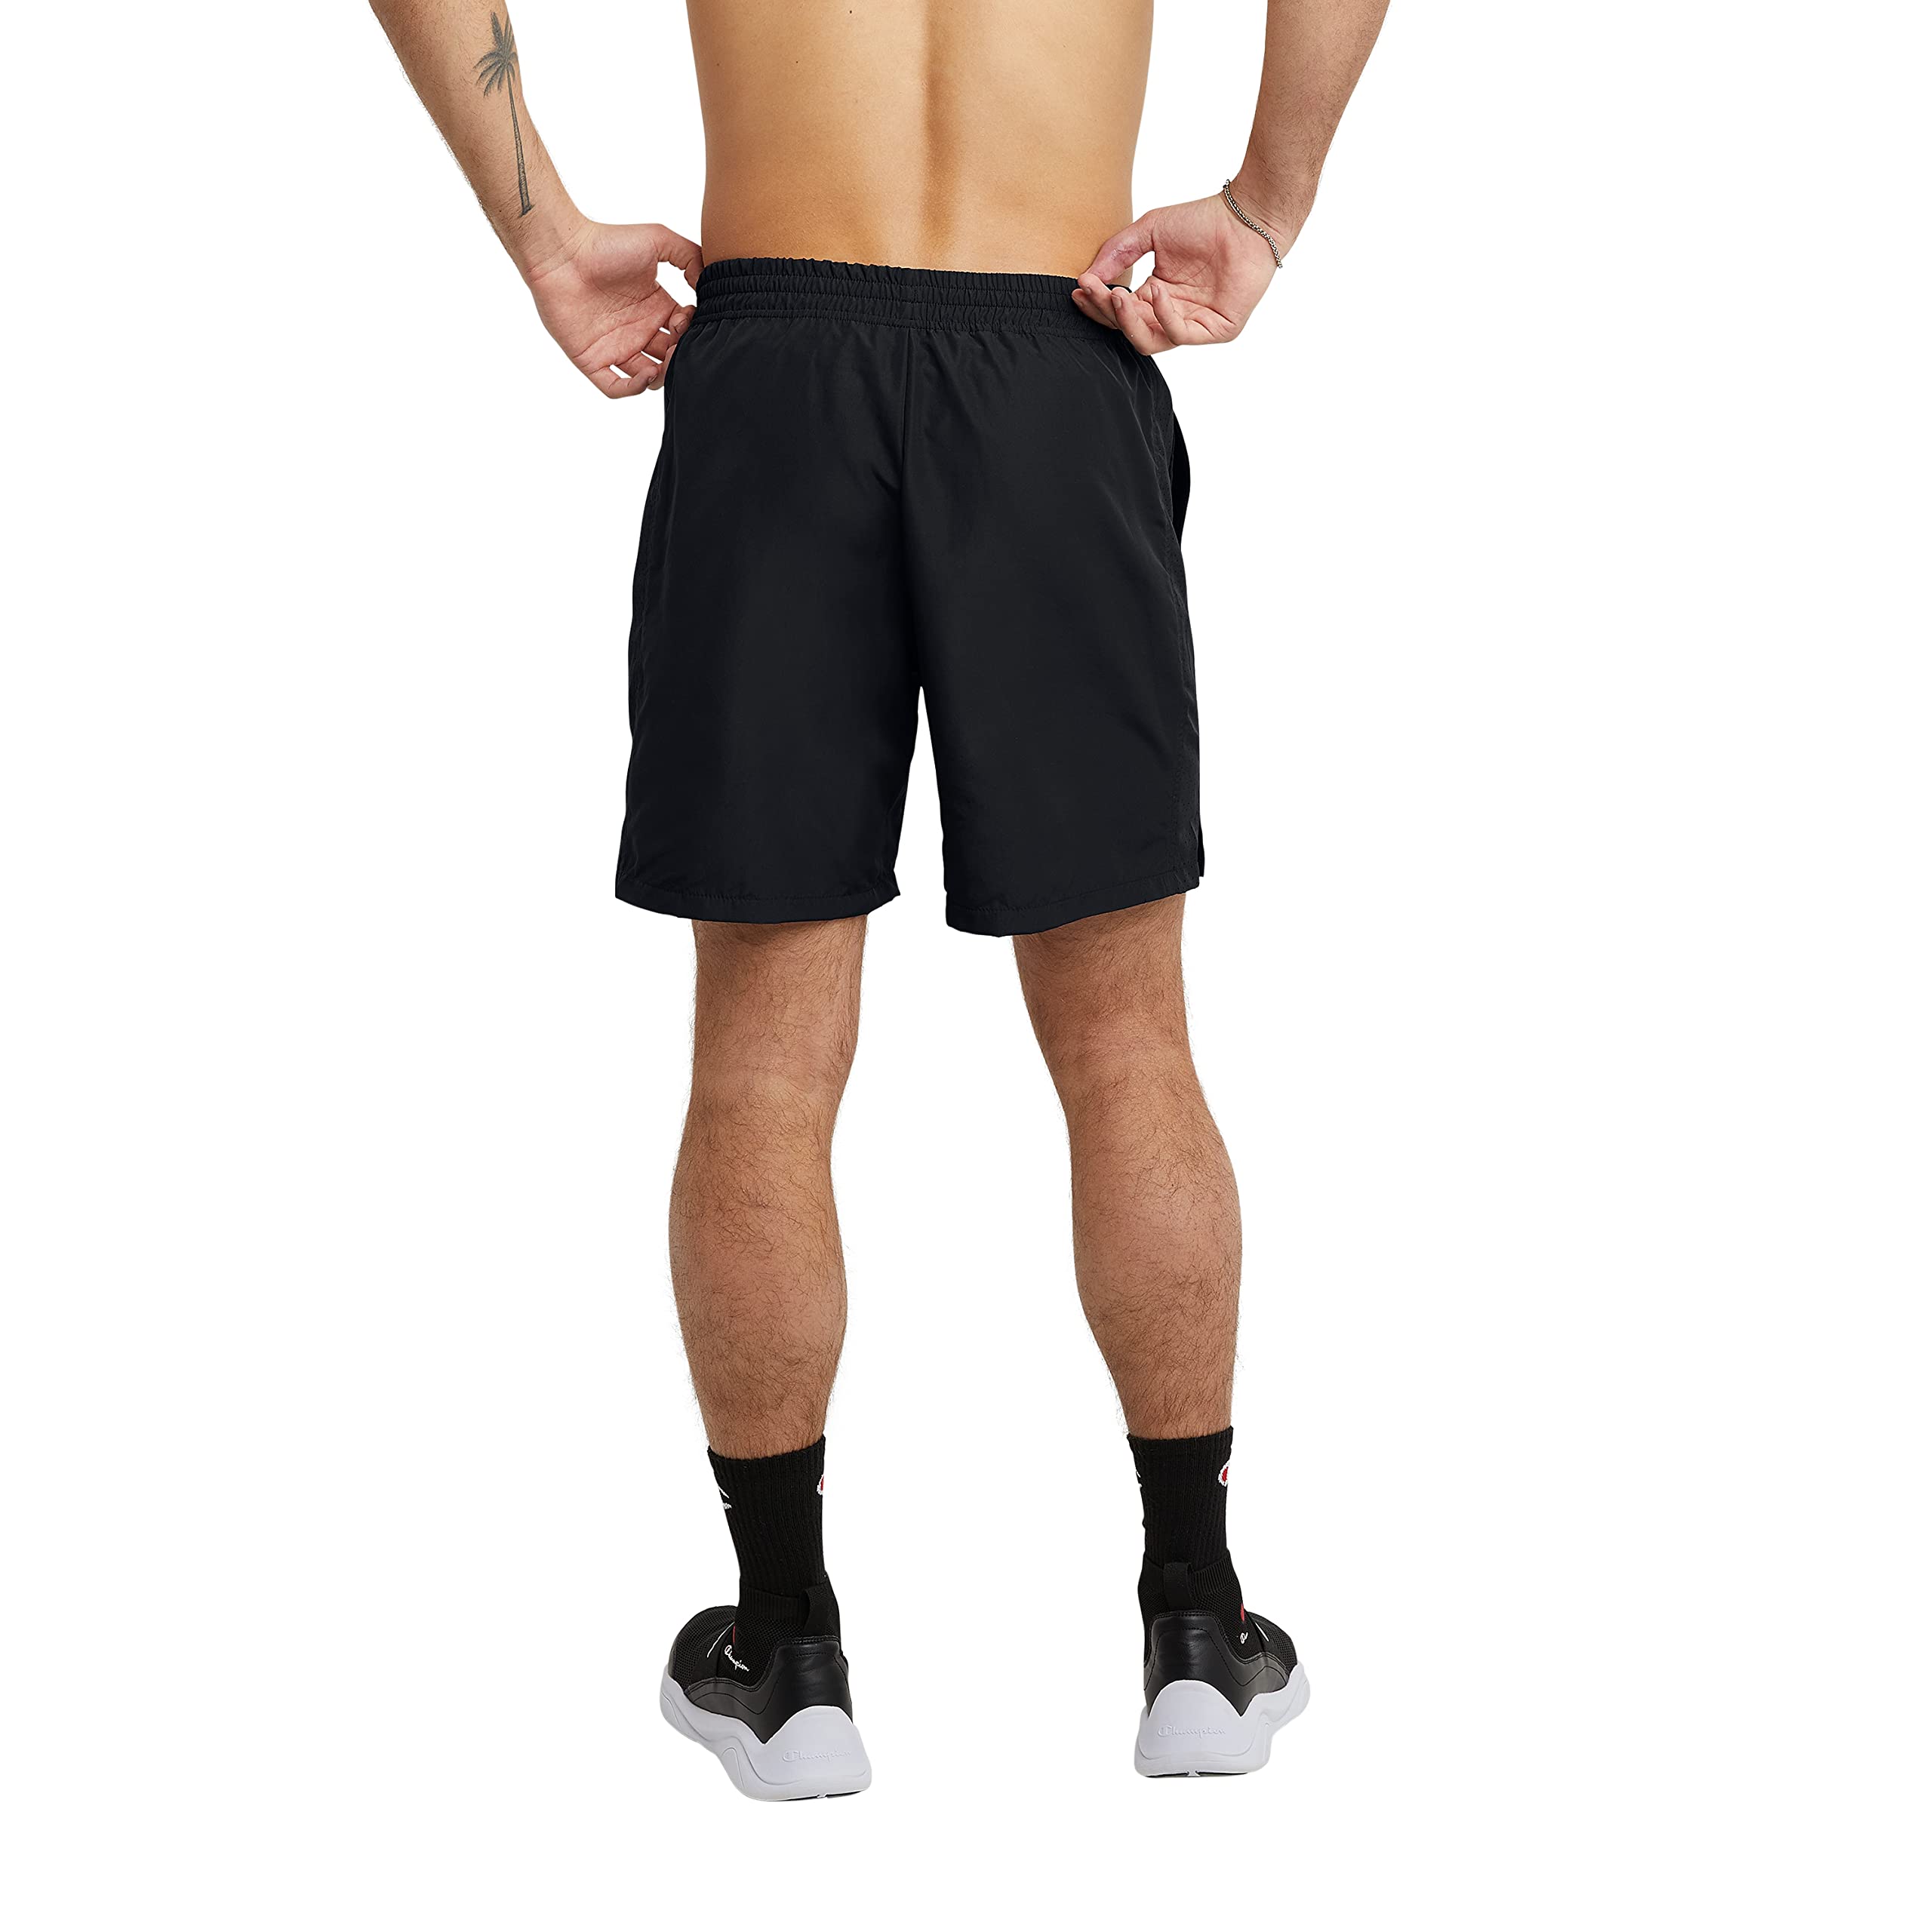 Champion Men's Athletic Shorts, Unlined Shorts, Lightweight Mid-Length Basketball Shorts, 7